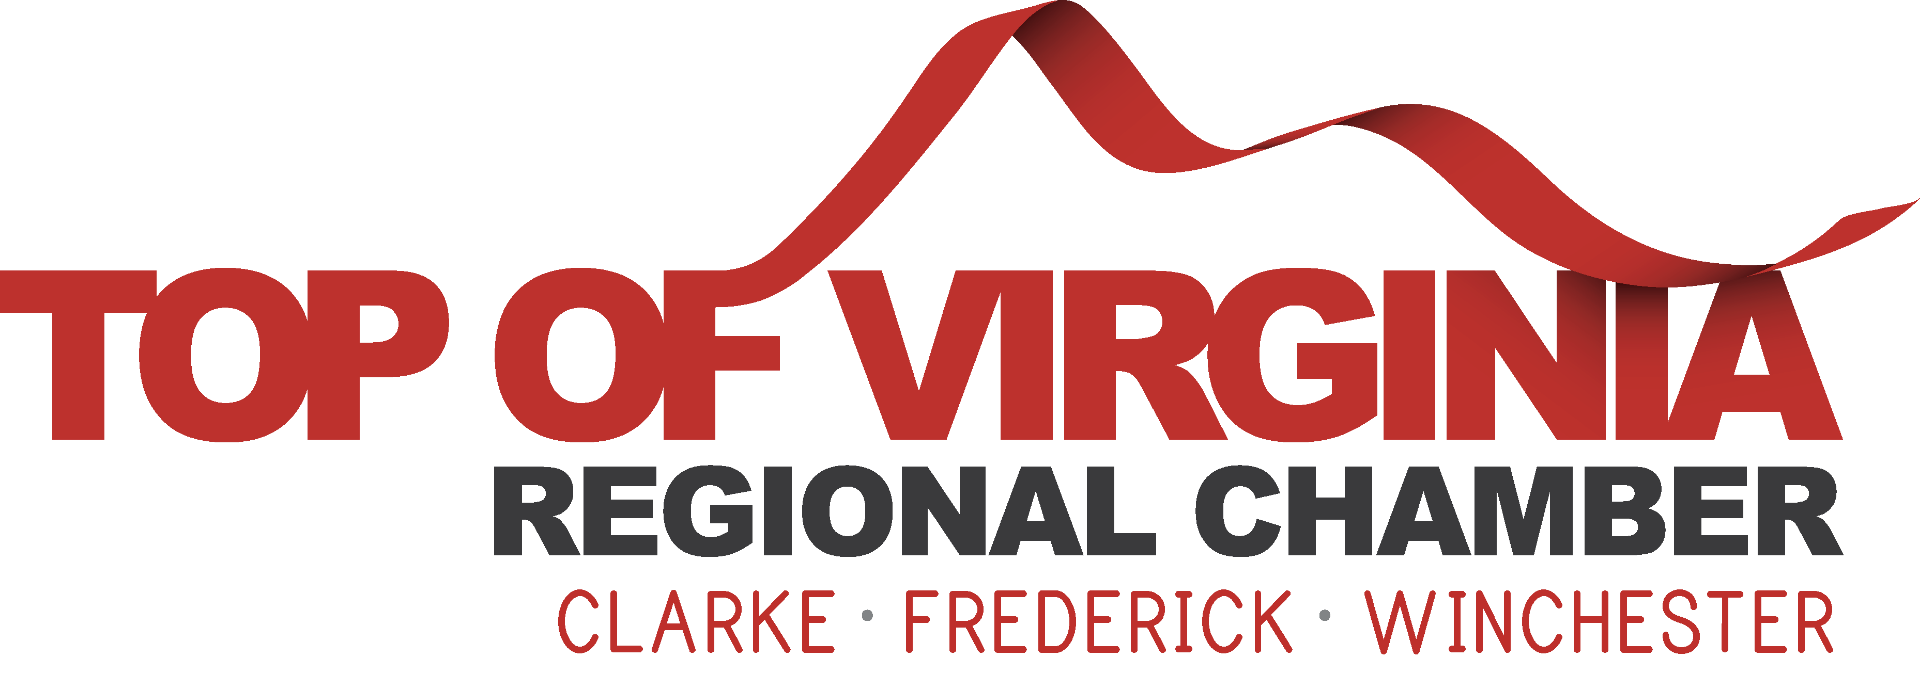 Top of Virginia Regional Chamber Online Store by Vubiz